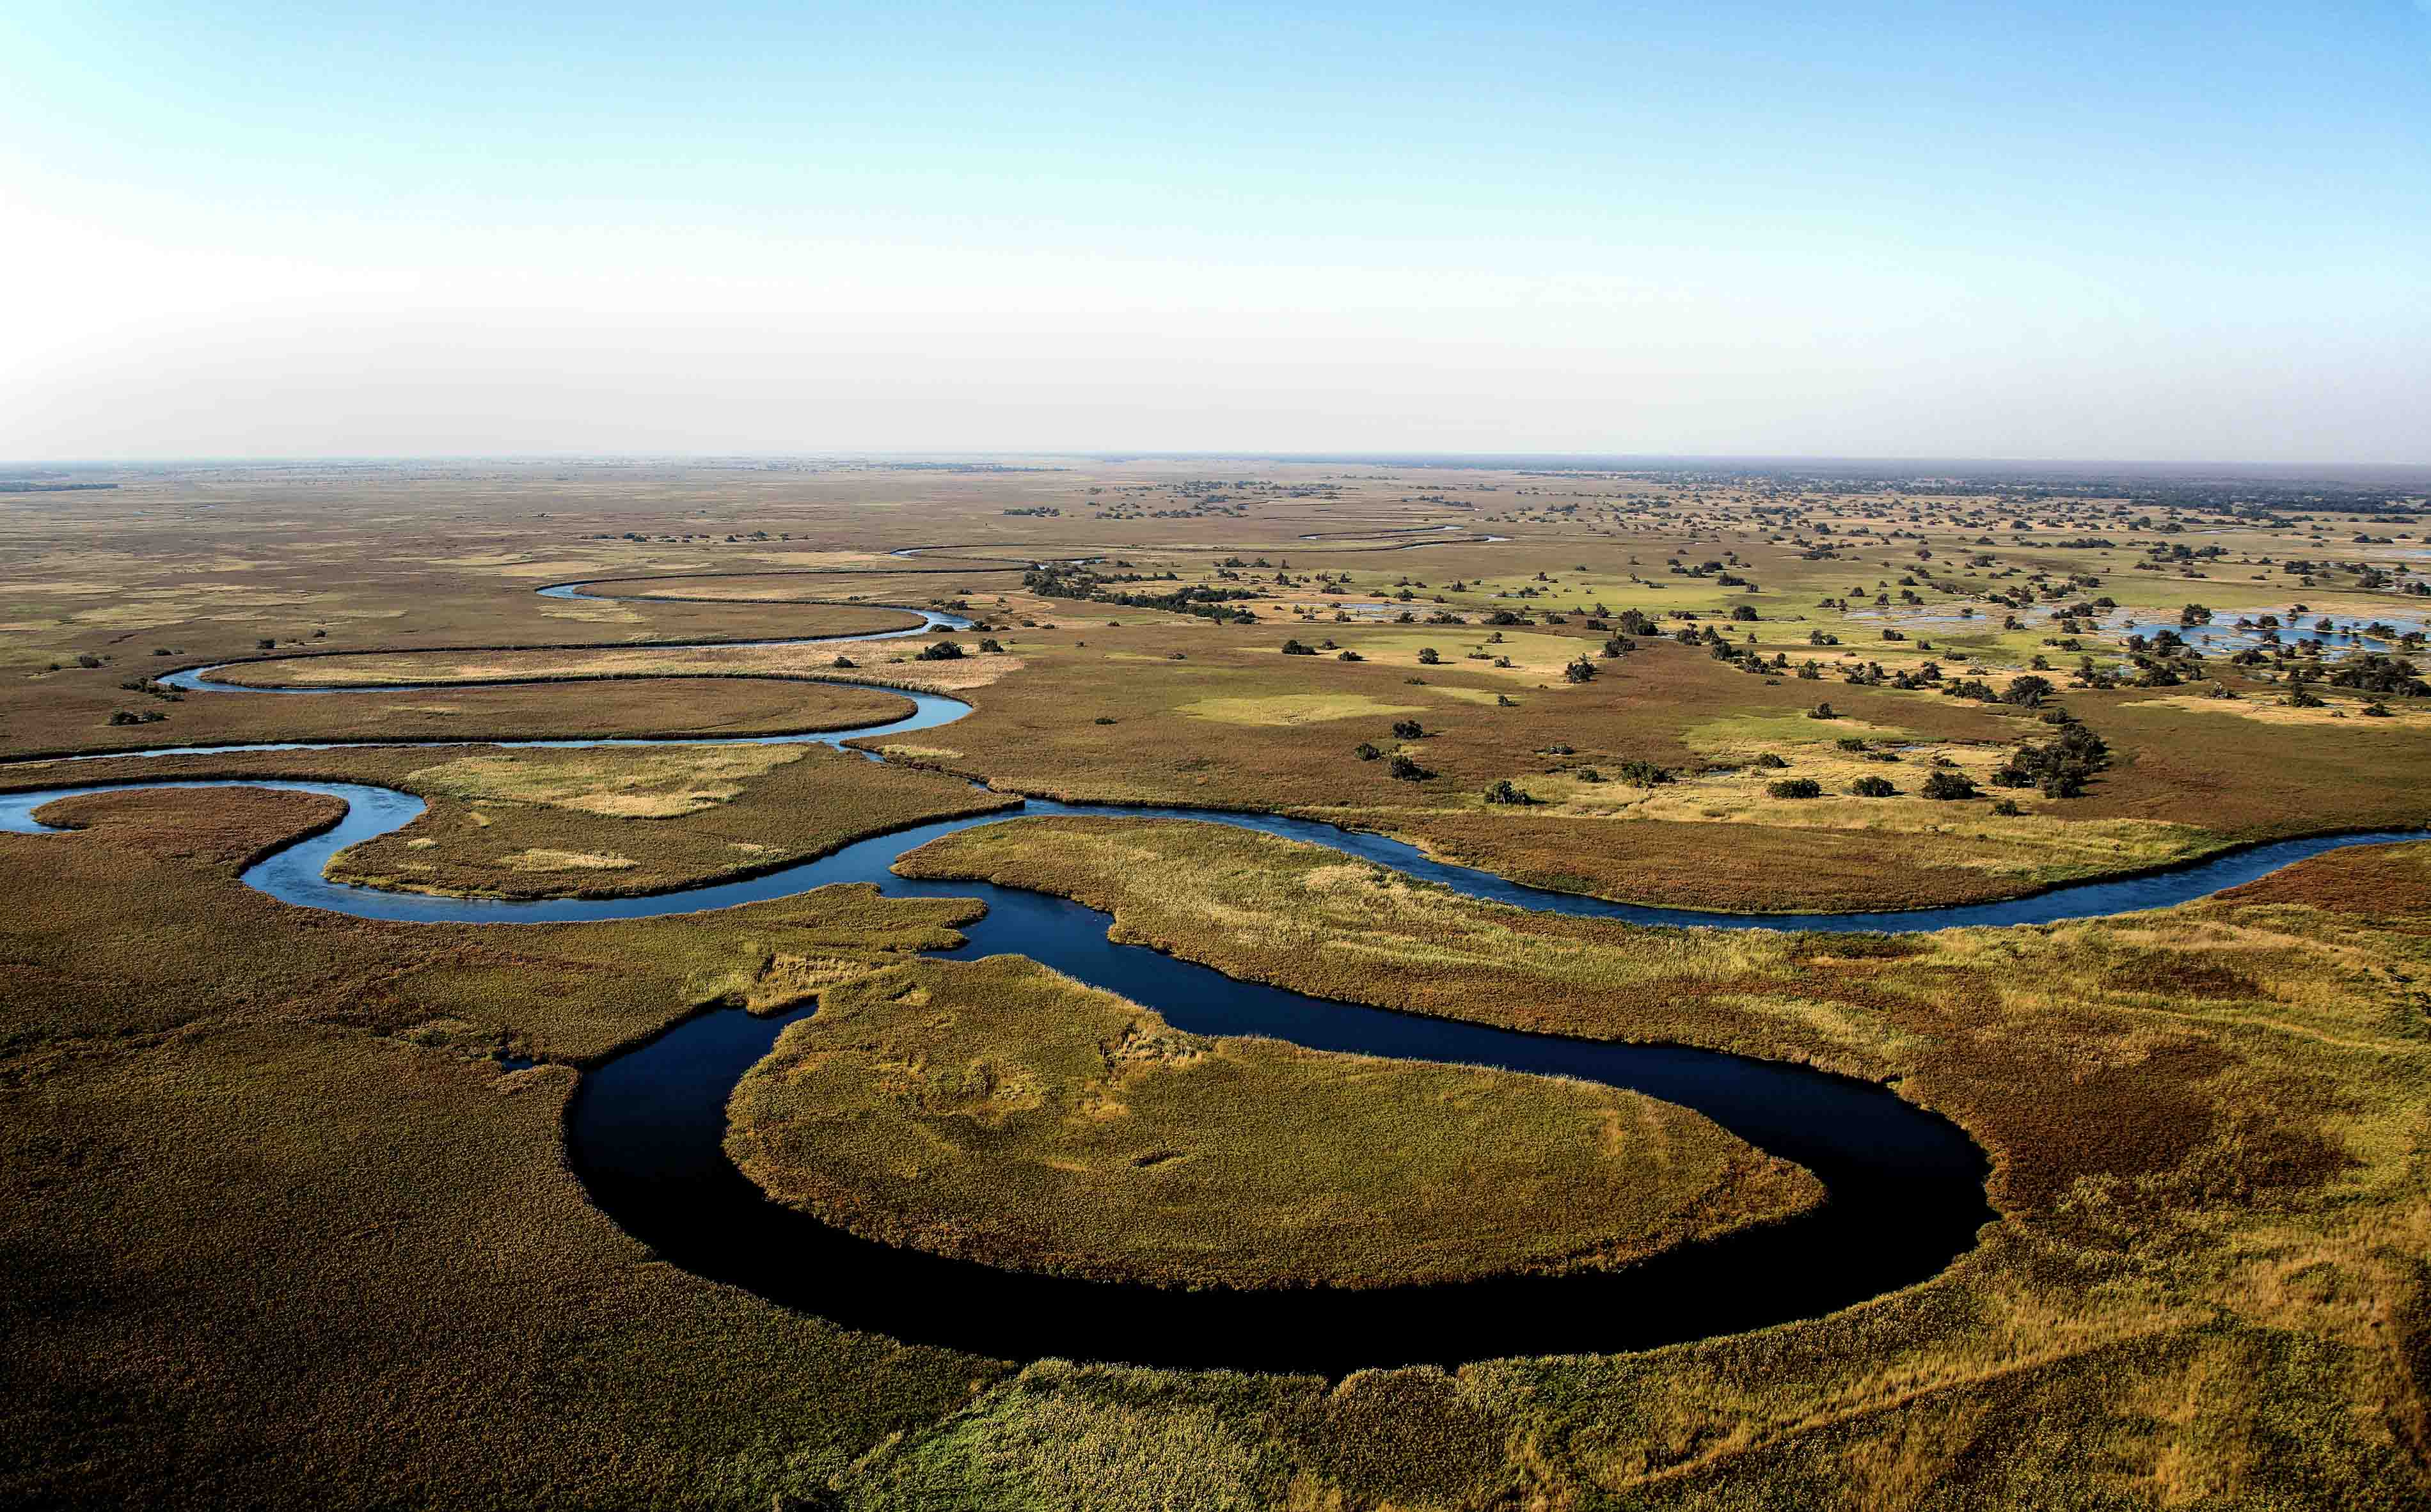 okavango river